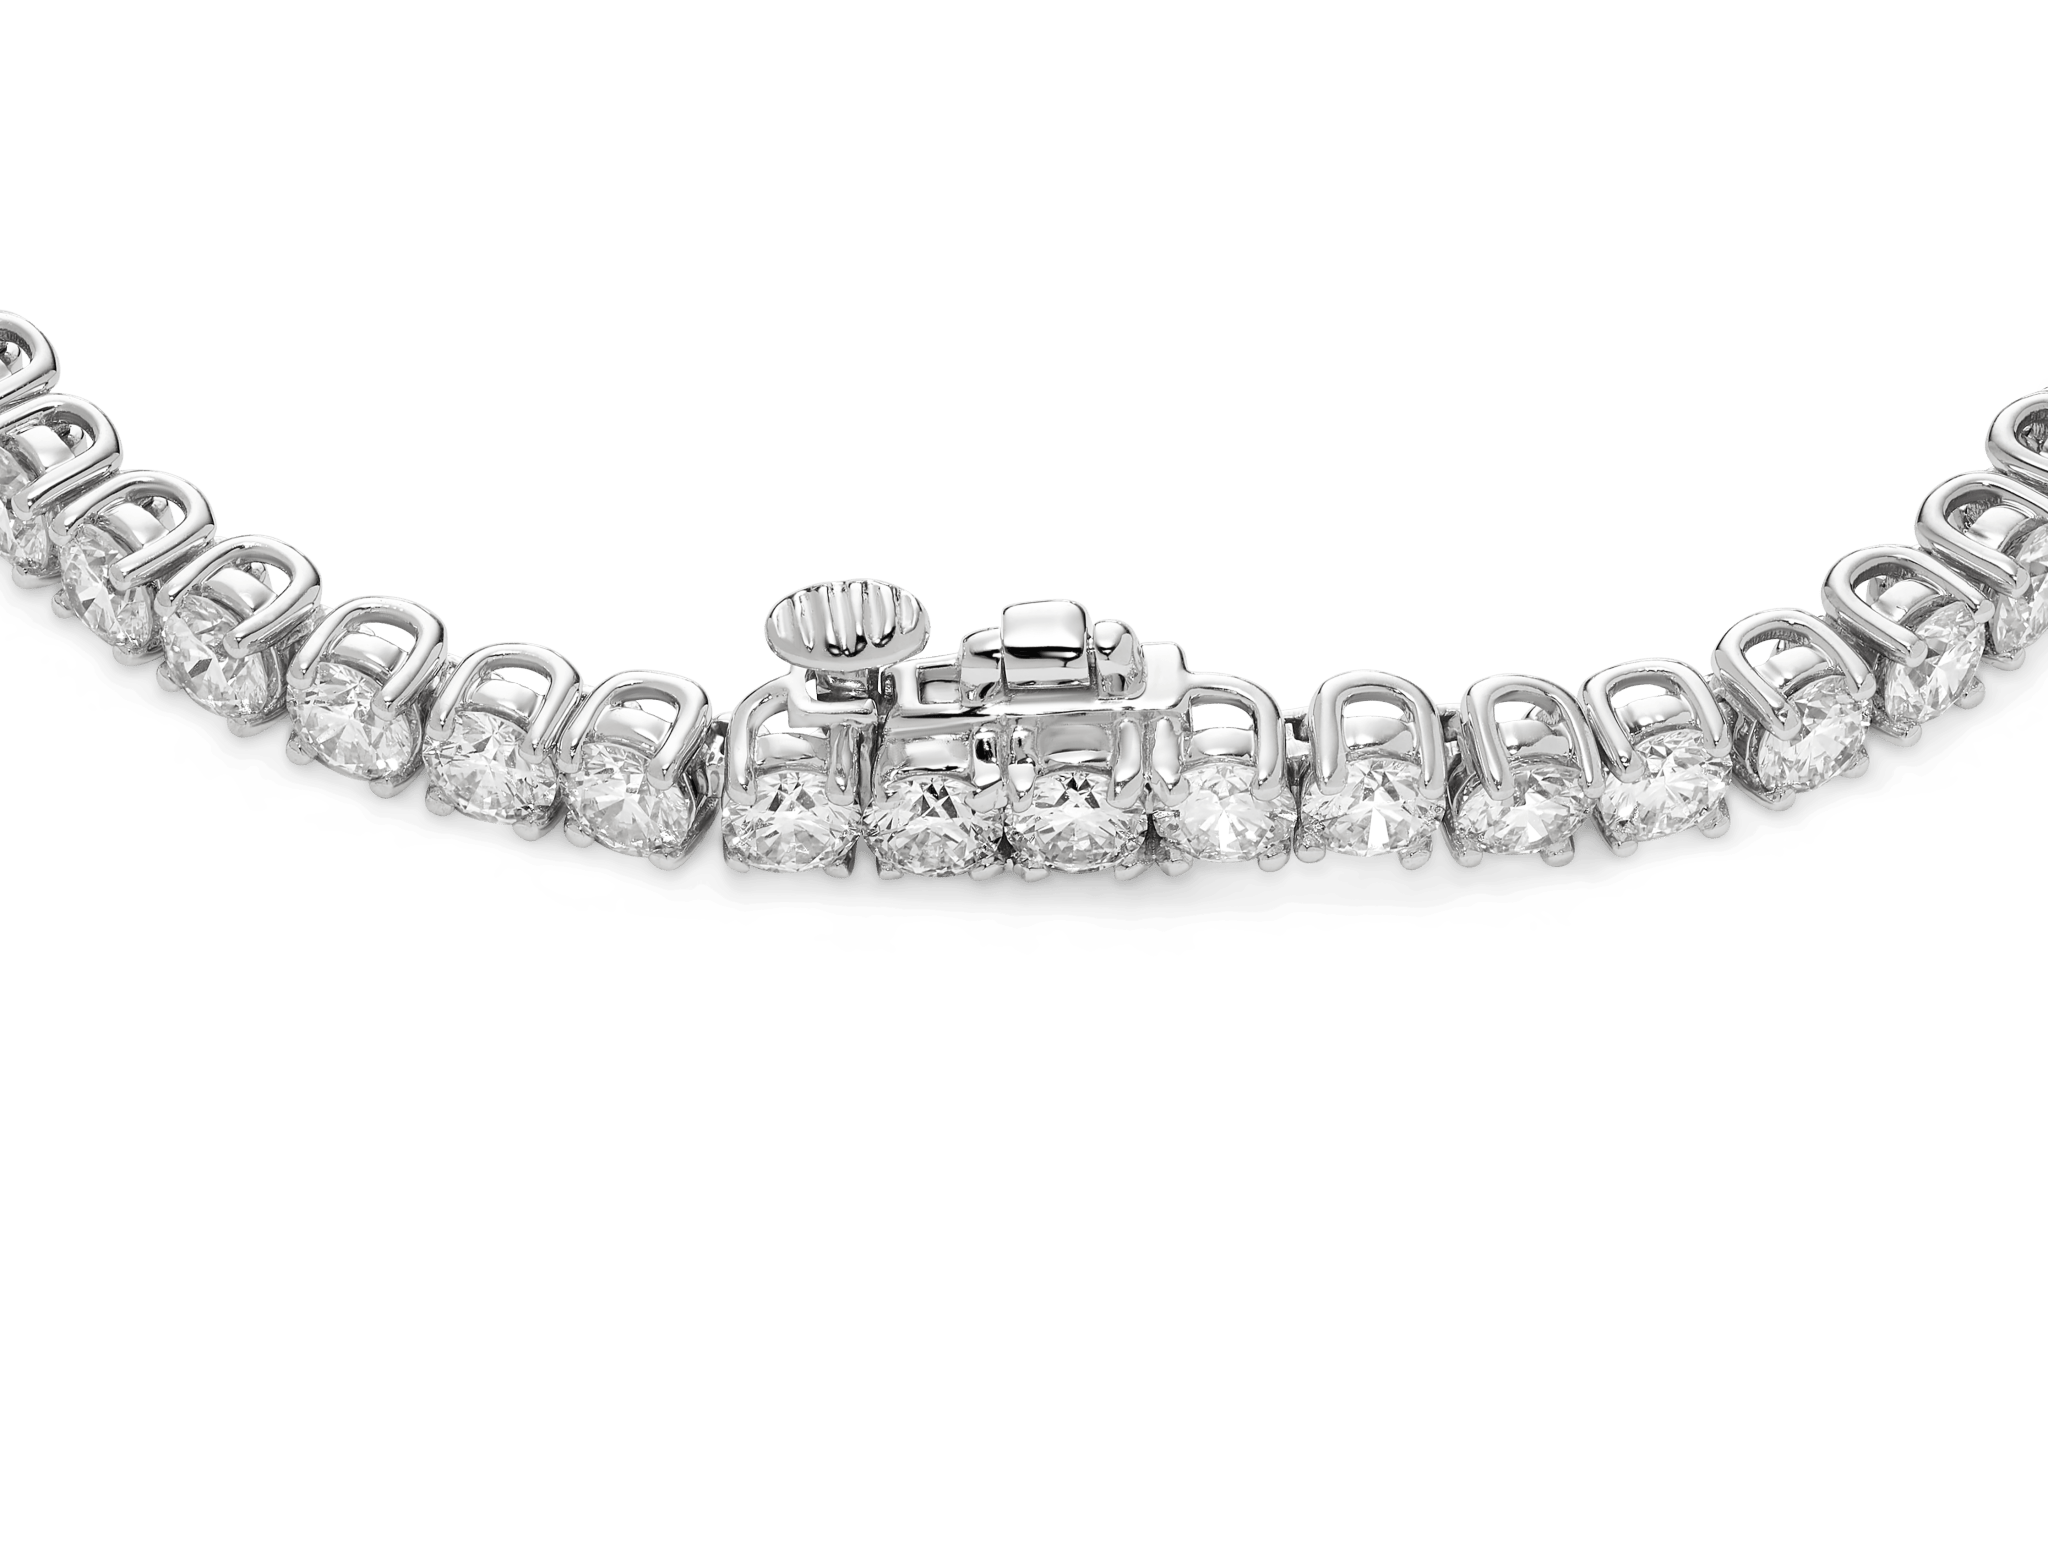 Lab-Grown Diamond Small Tennis Bracelet - G/H color, 7" length | White - #Lightbox Jewelry#